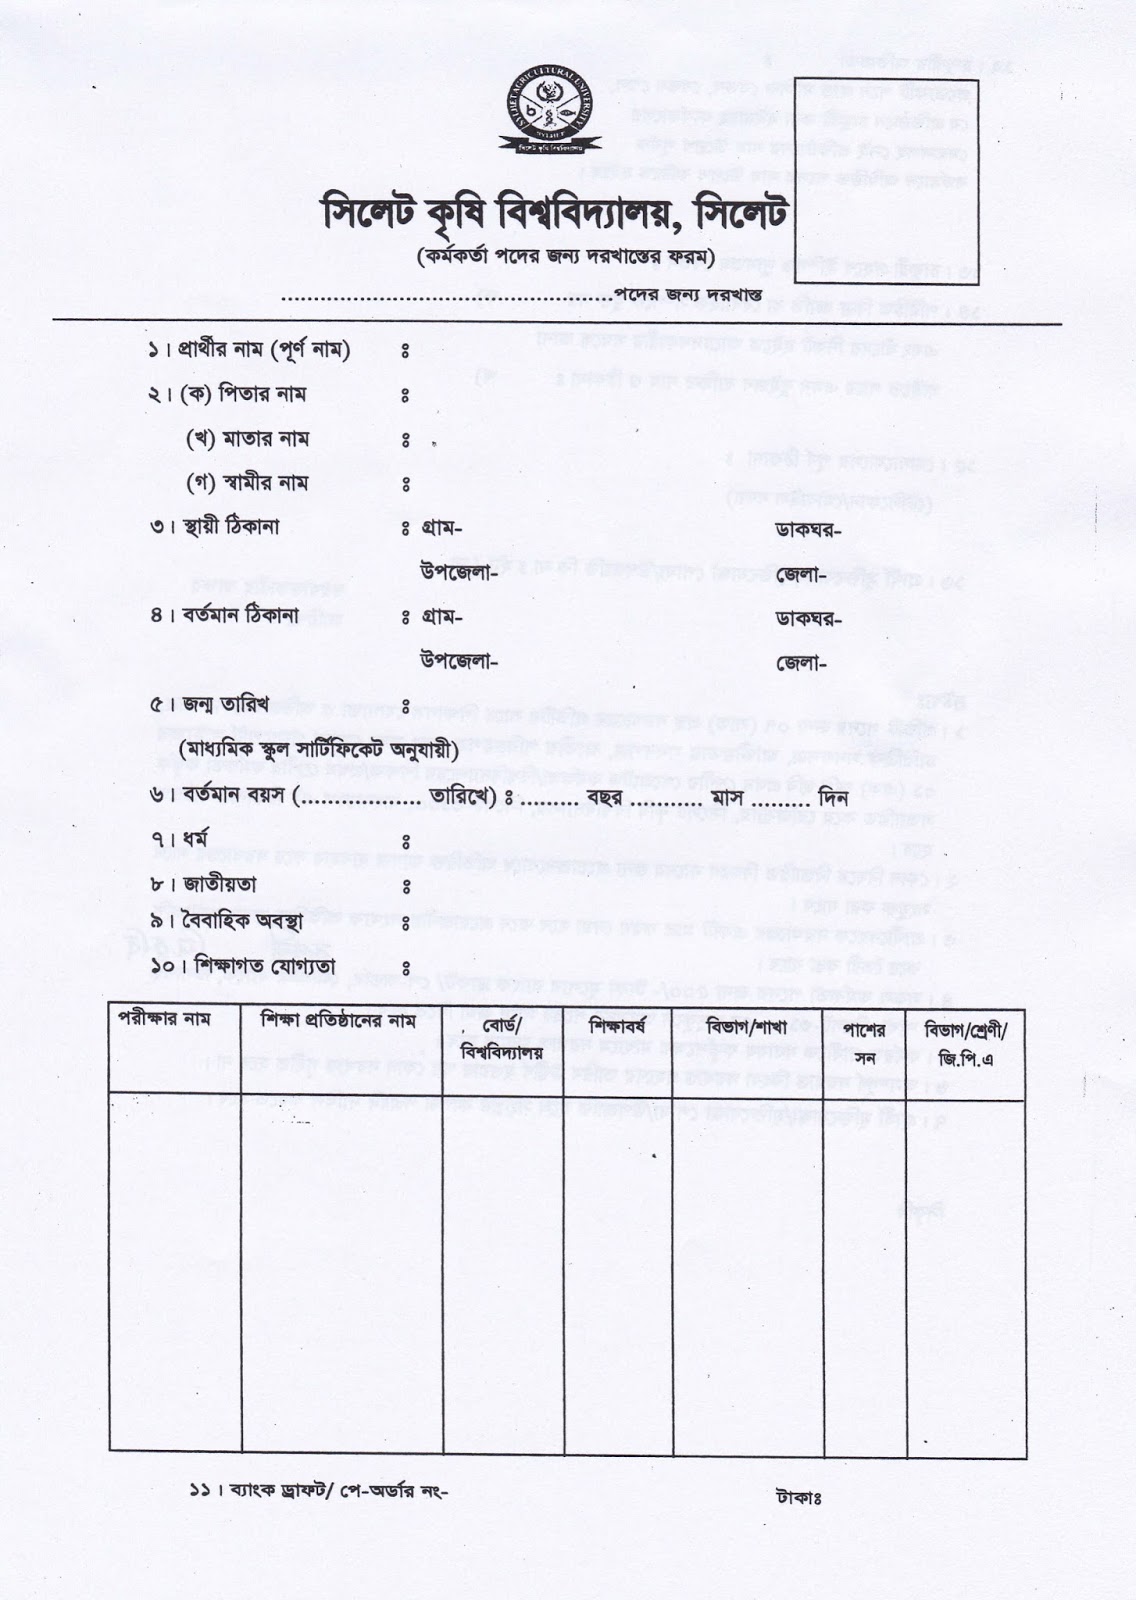 Sylhet Agricultural University (SAU) Officer Application Form